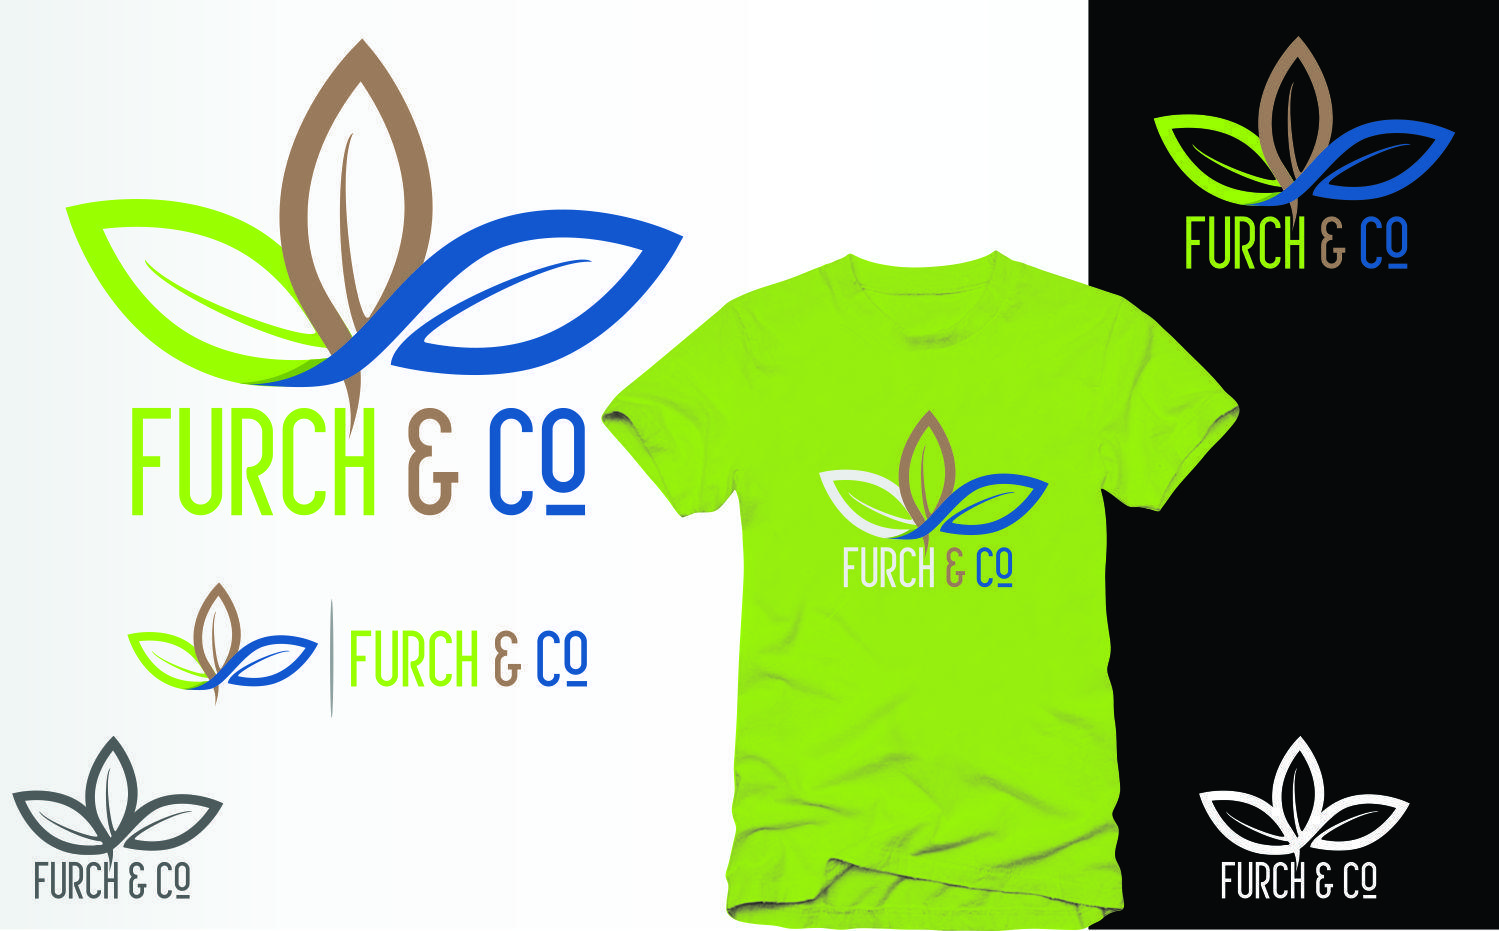 Inc Clothing Logo - Feminine, Elegant, Clothing Logo Design for Furch & Co by eightball ...